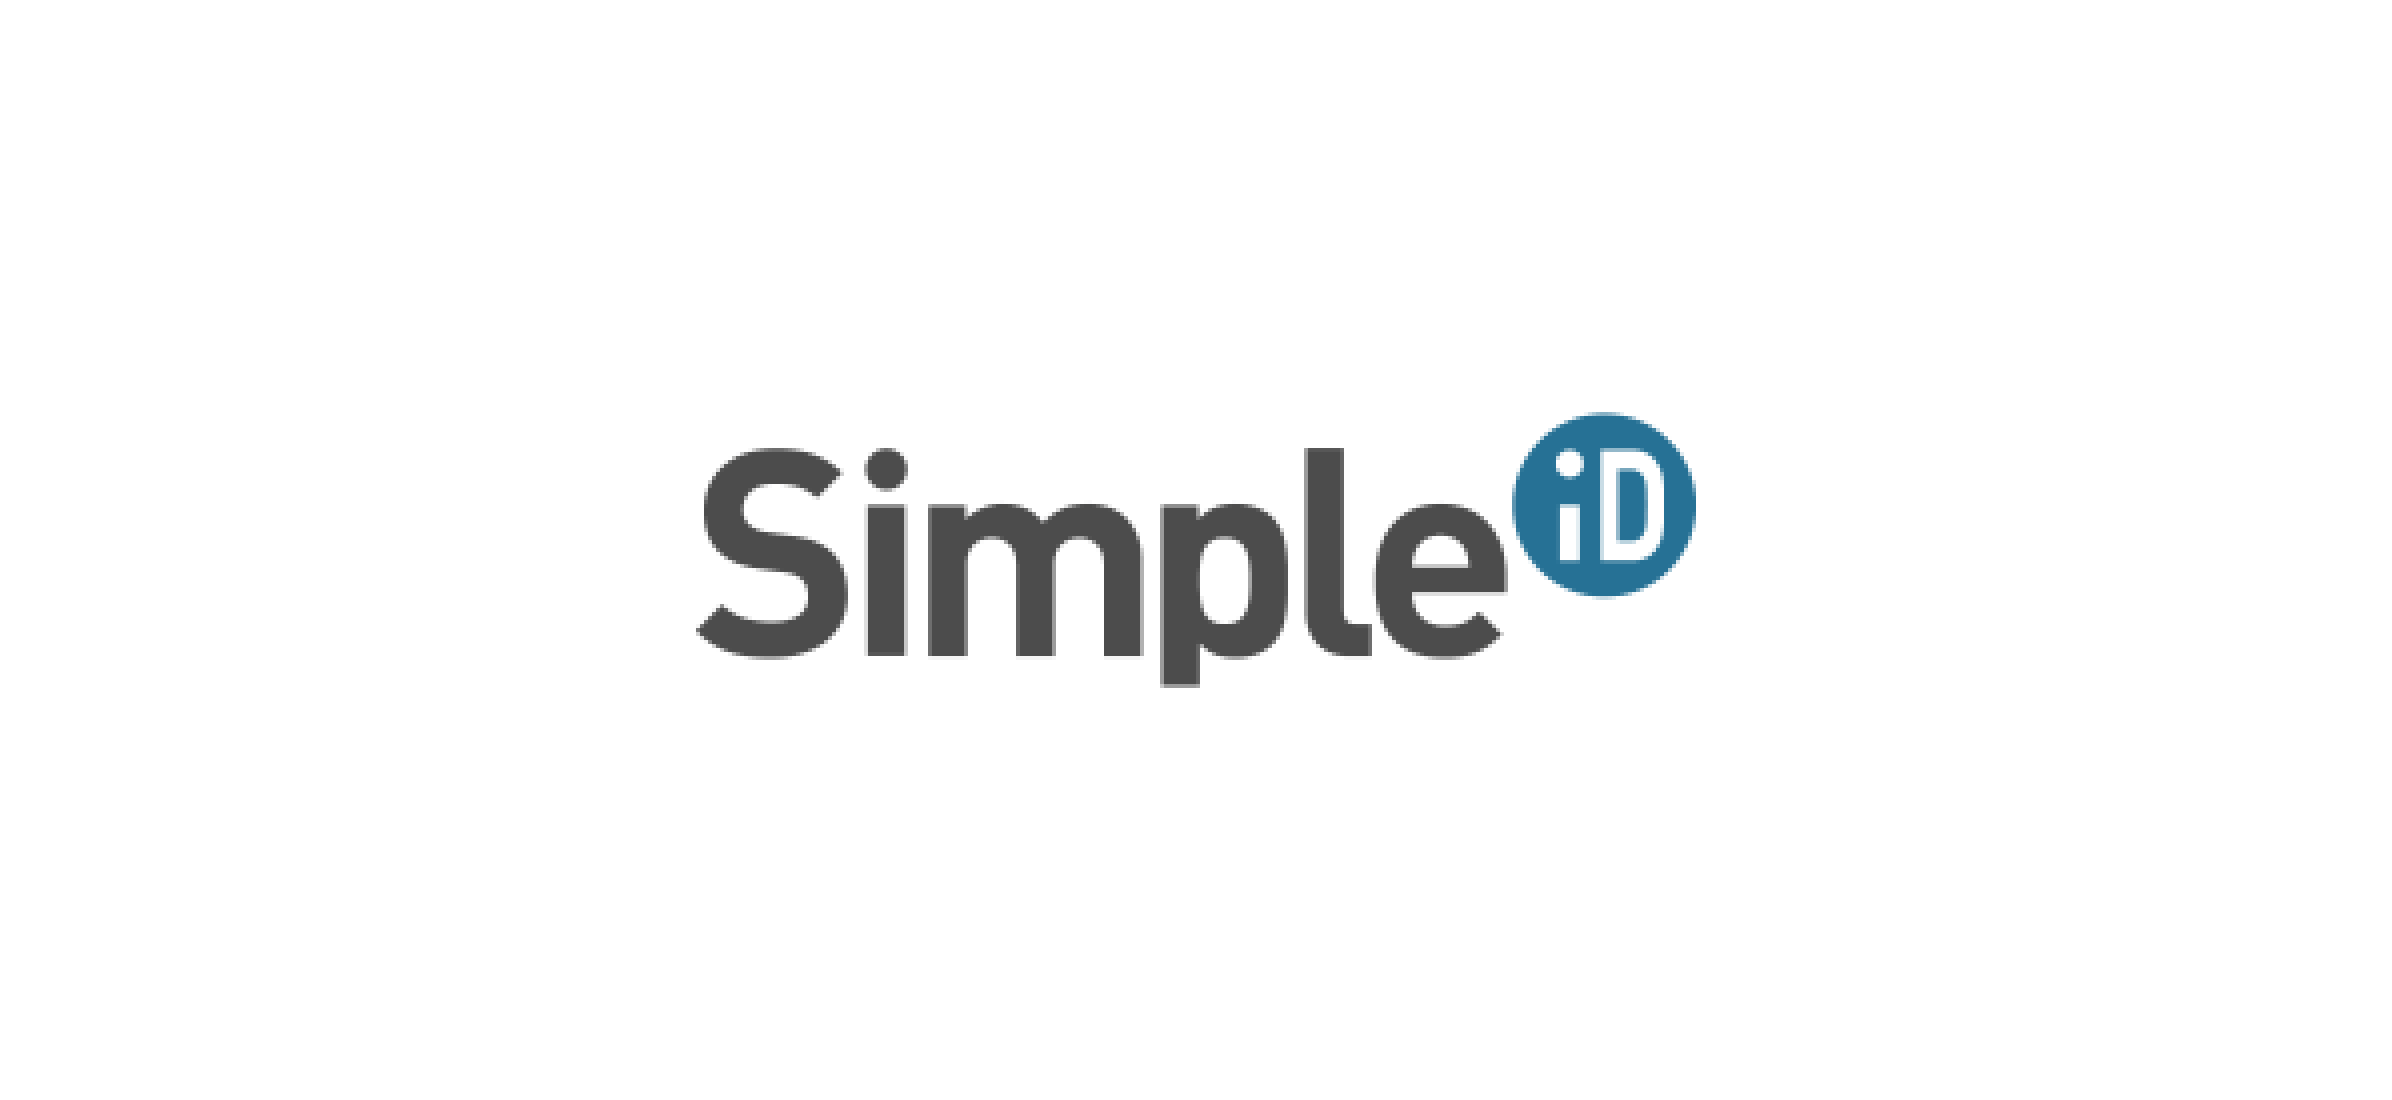 The Simple iD logo